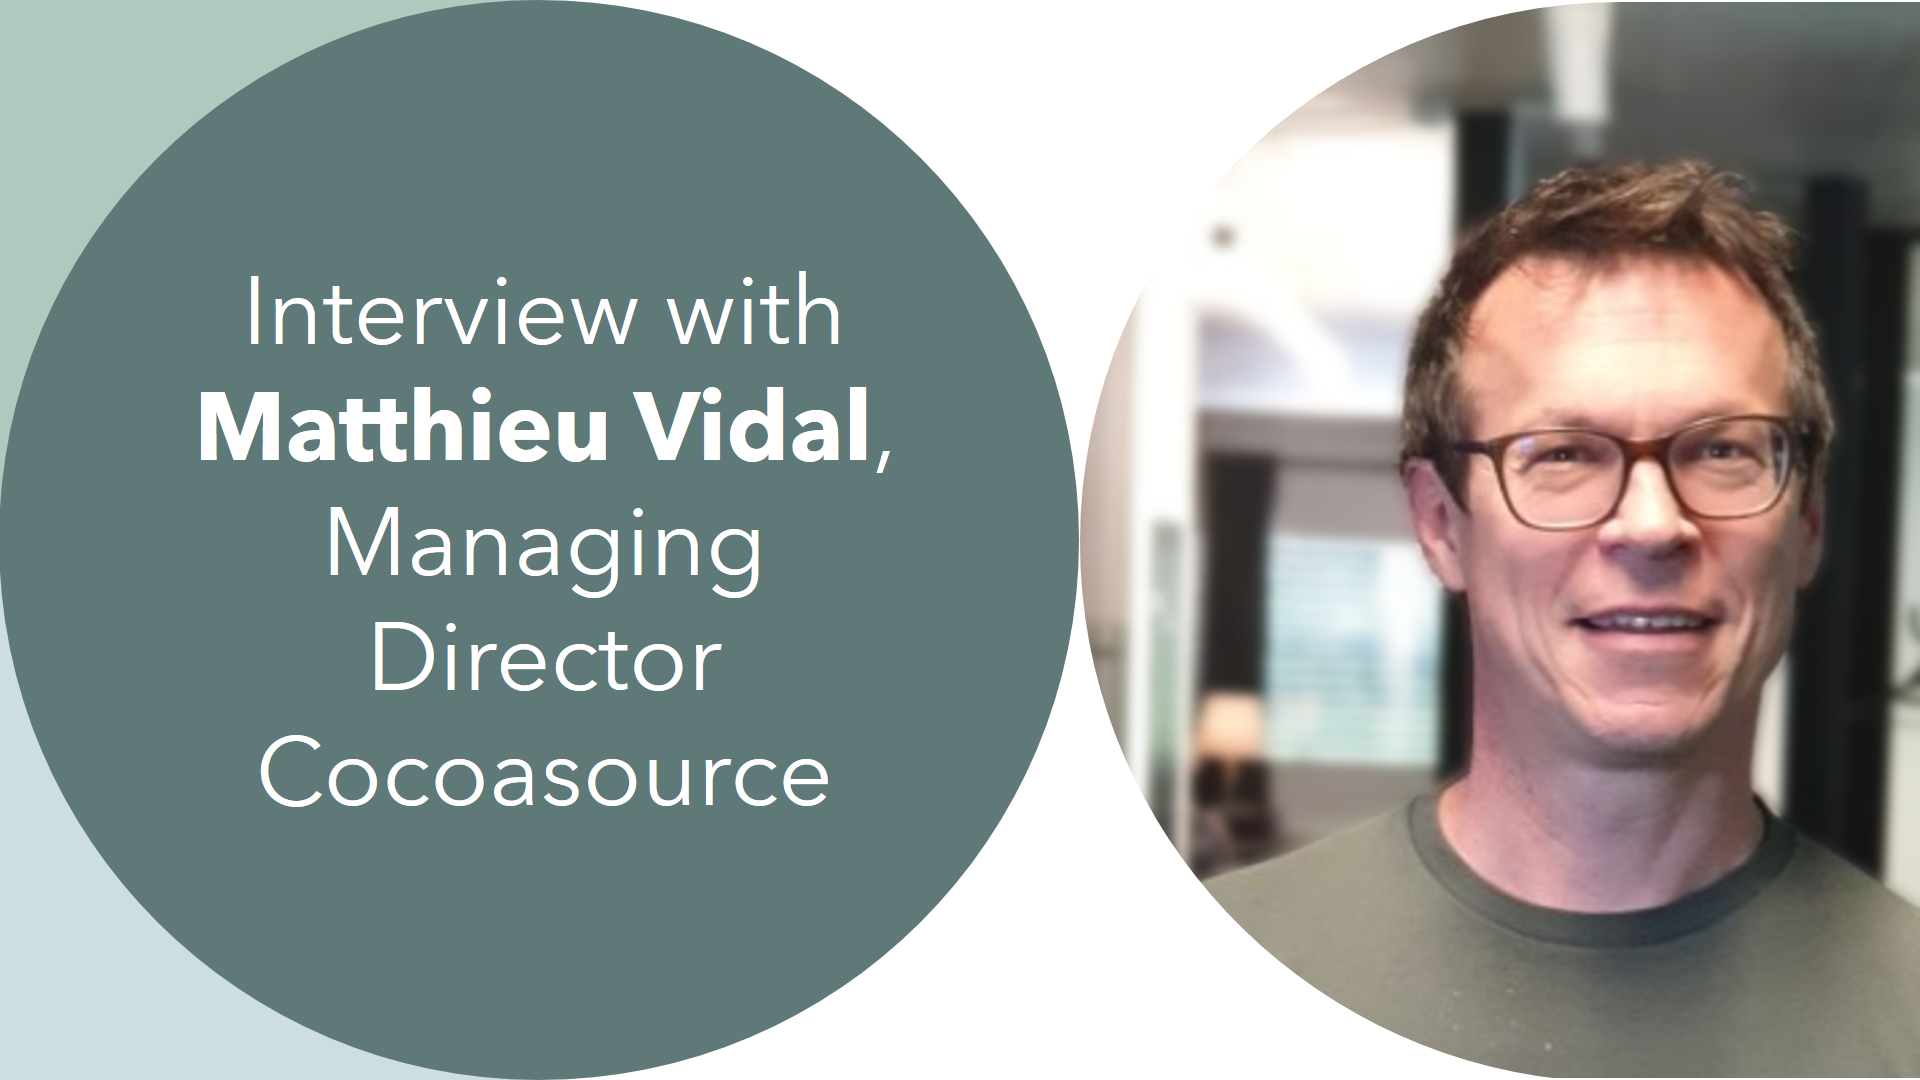 An image of Matthieu Vidal, Managing Director of Cocoasource.